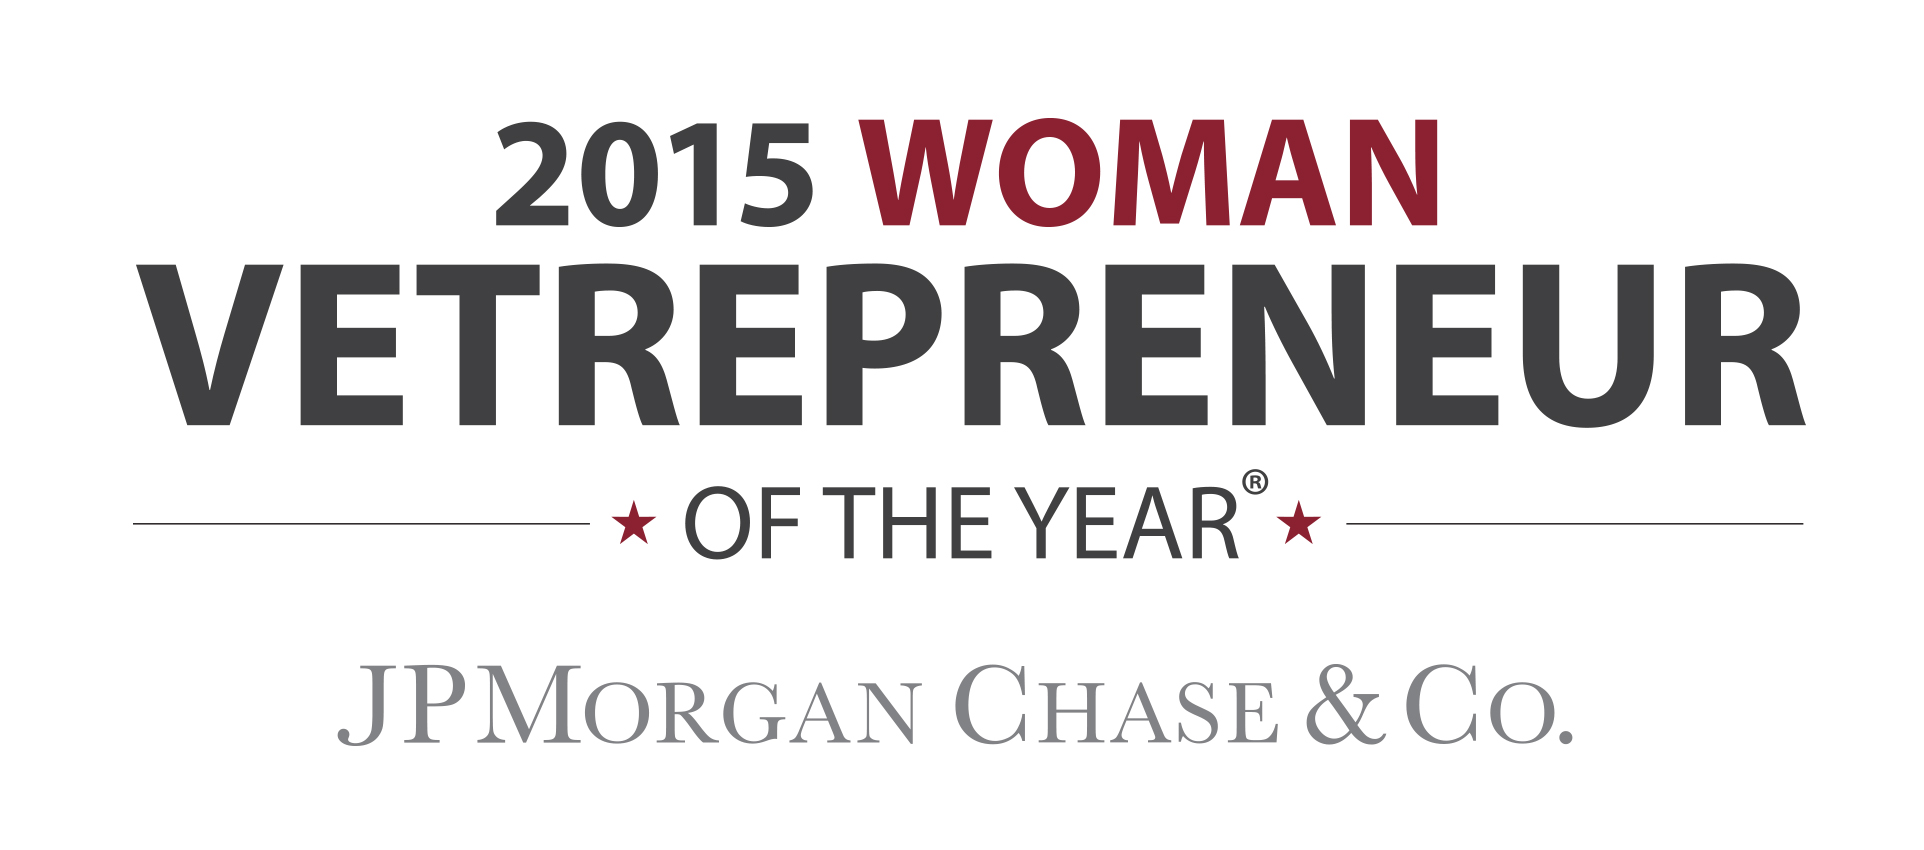 2015 Woman Vetrepreneur of the Year (R)